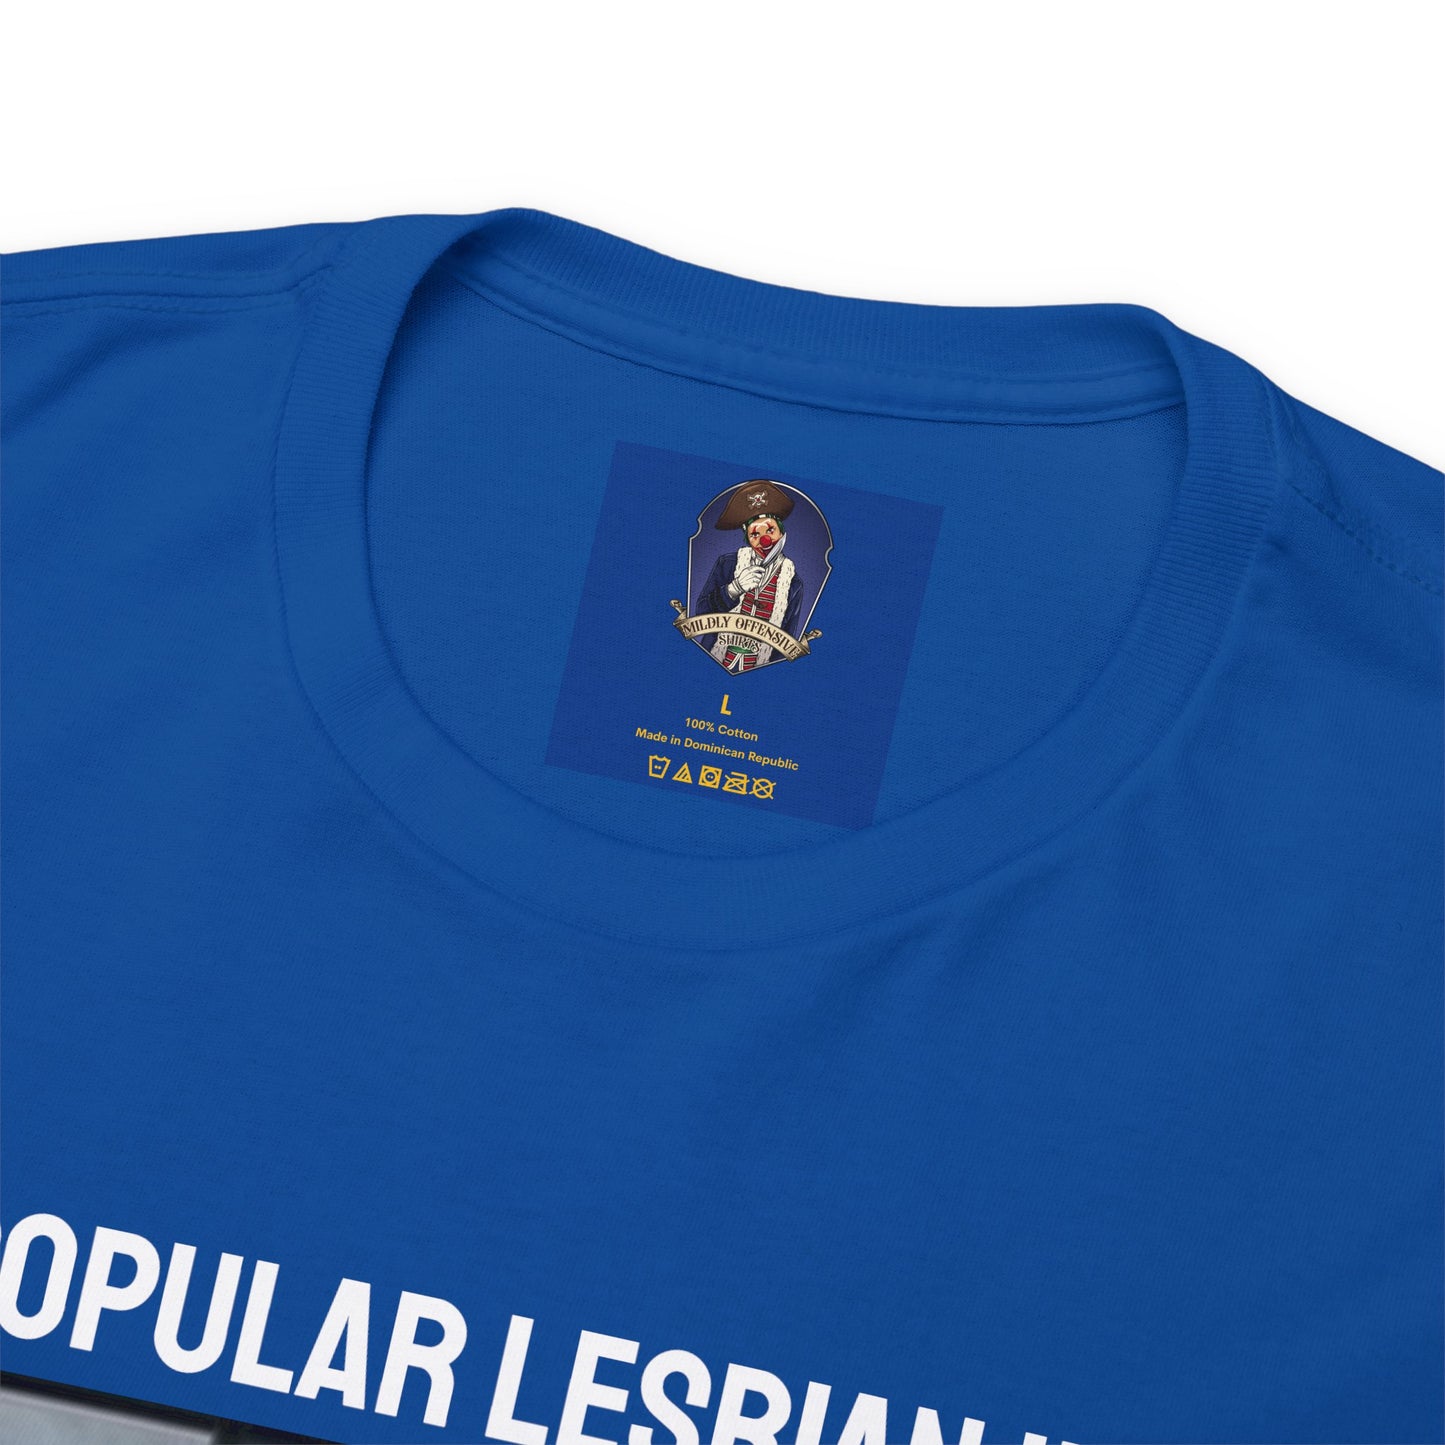 Most Popular Lesbian